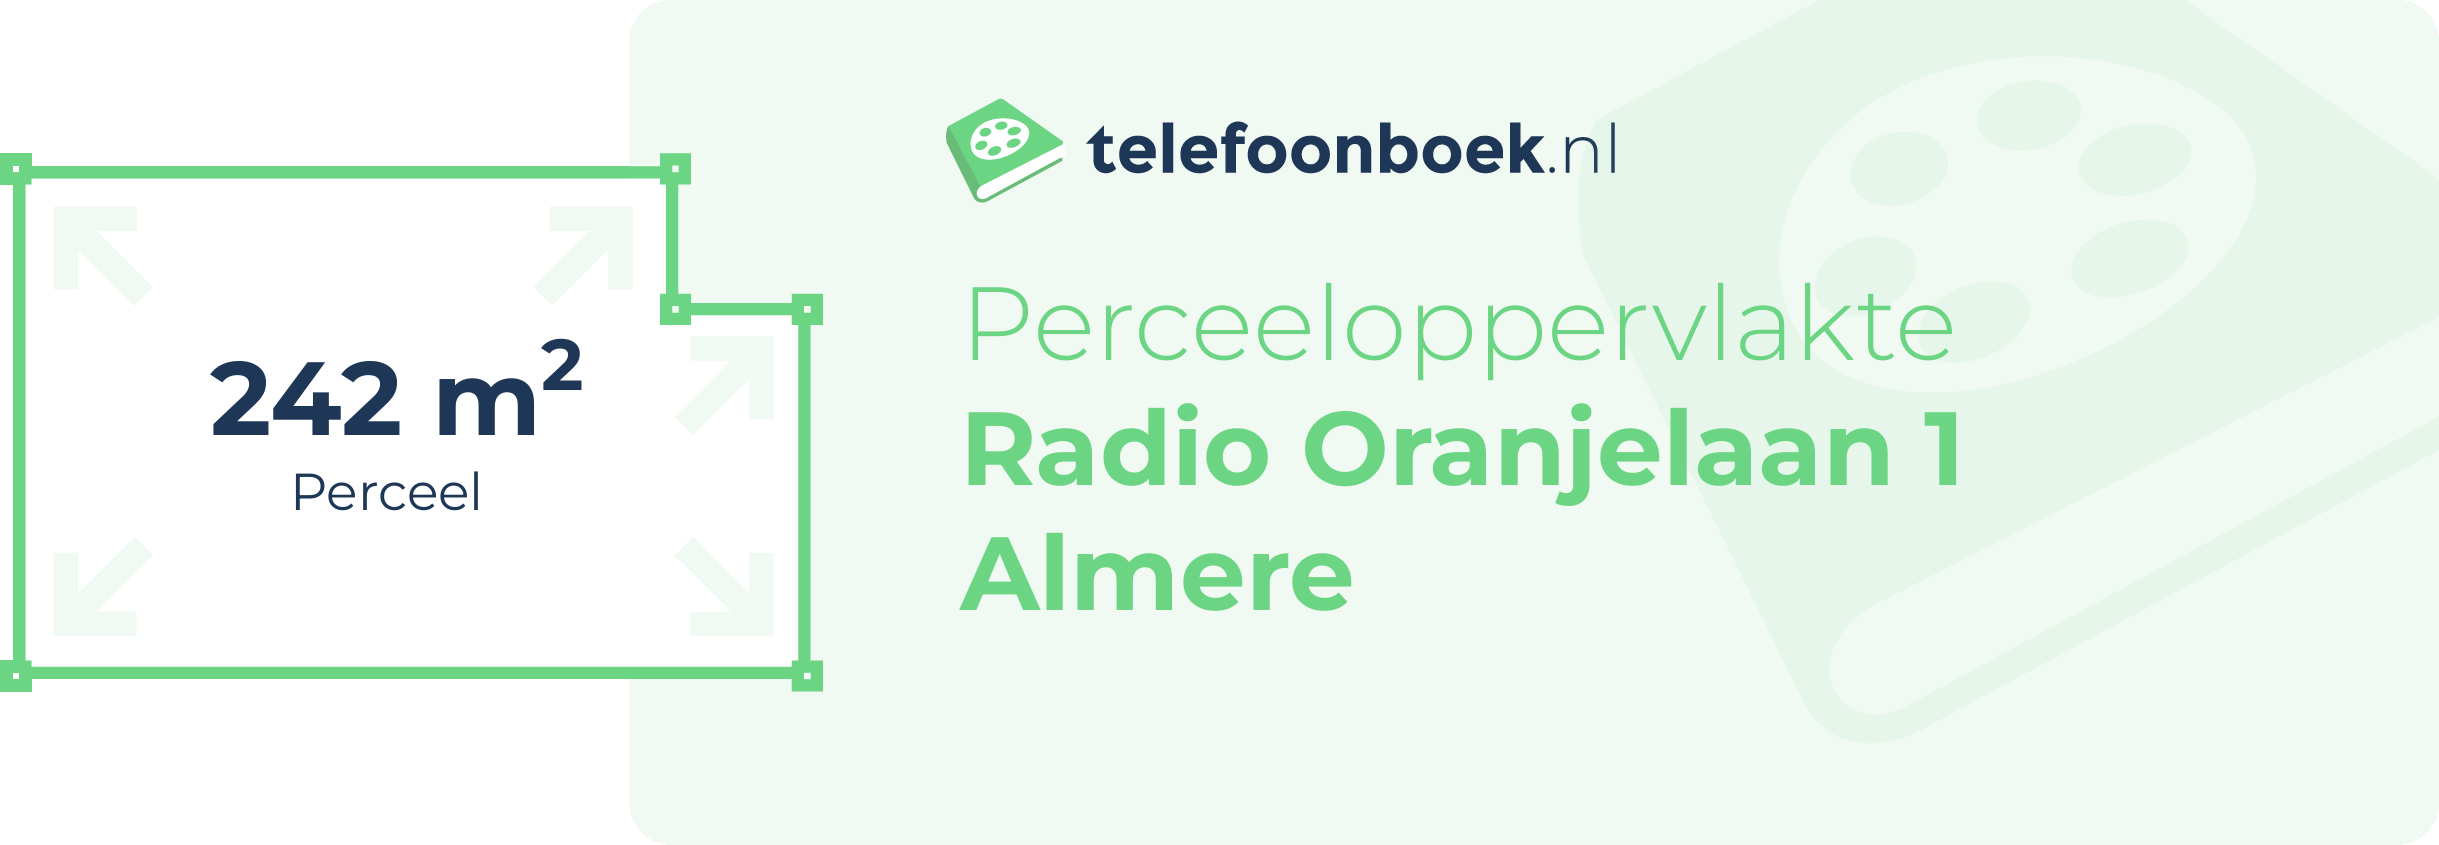 Perceeloppervlakte Radio Oranjelaan 1 Almere